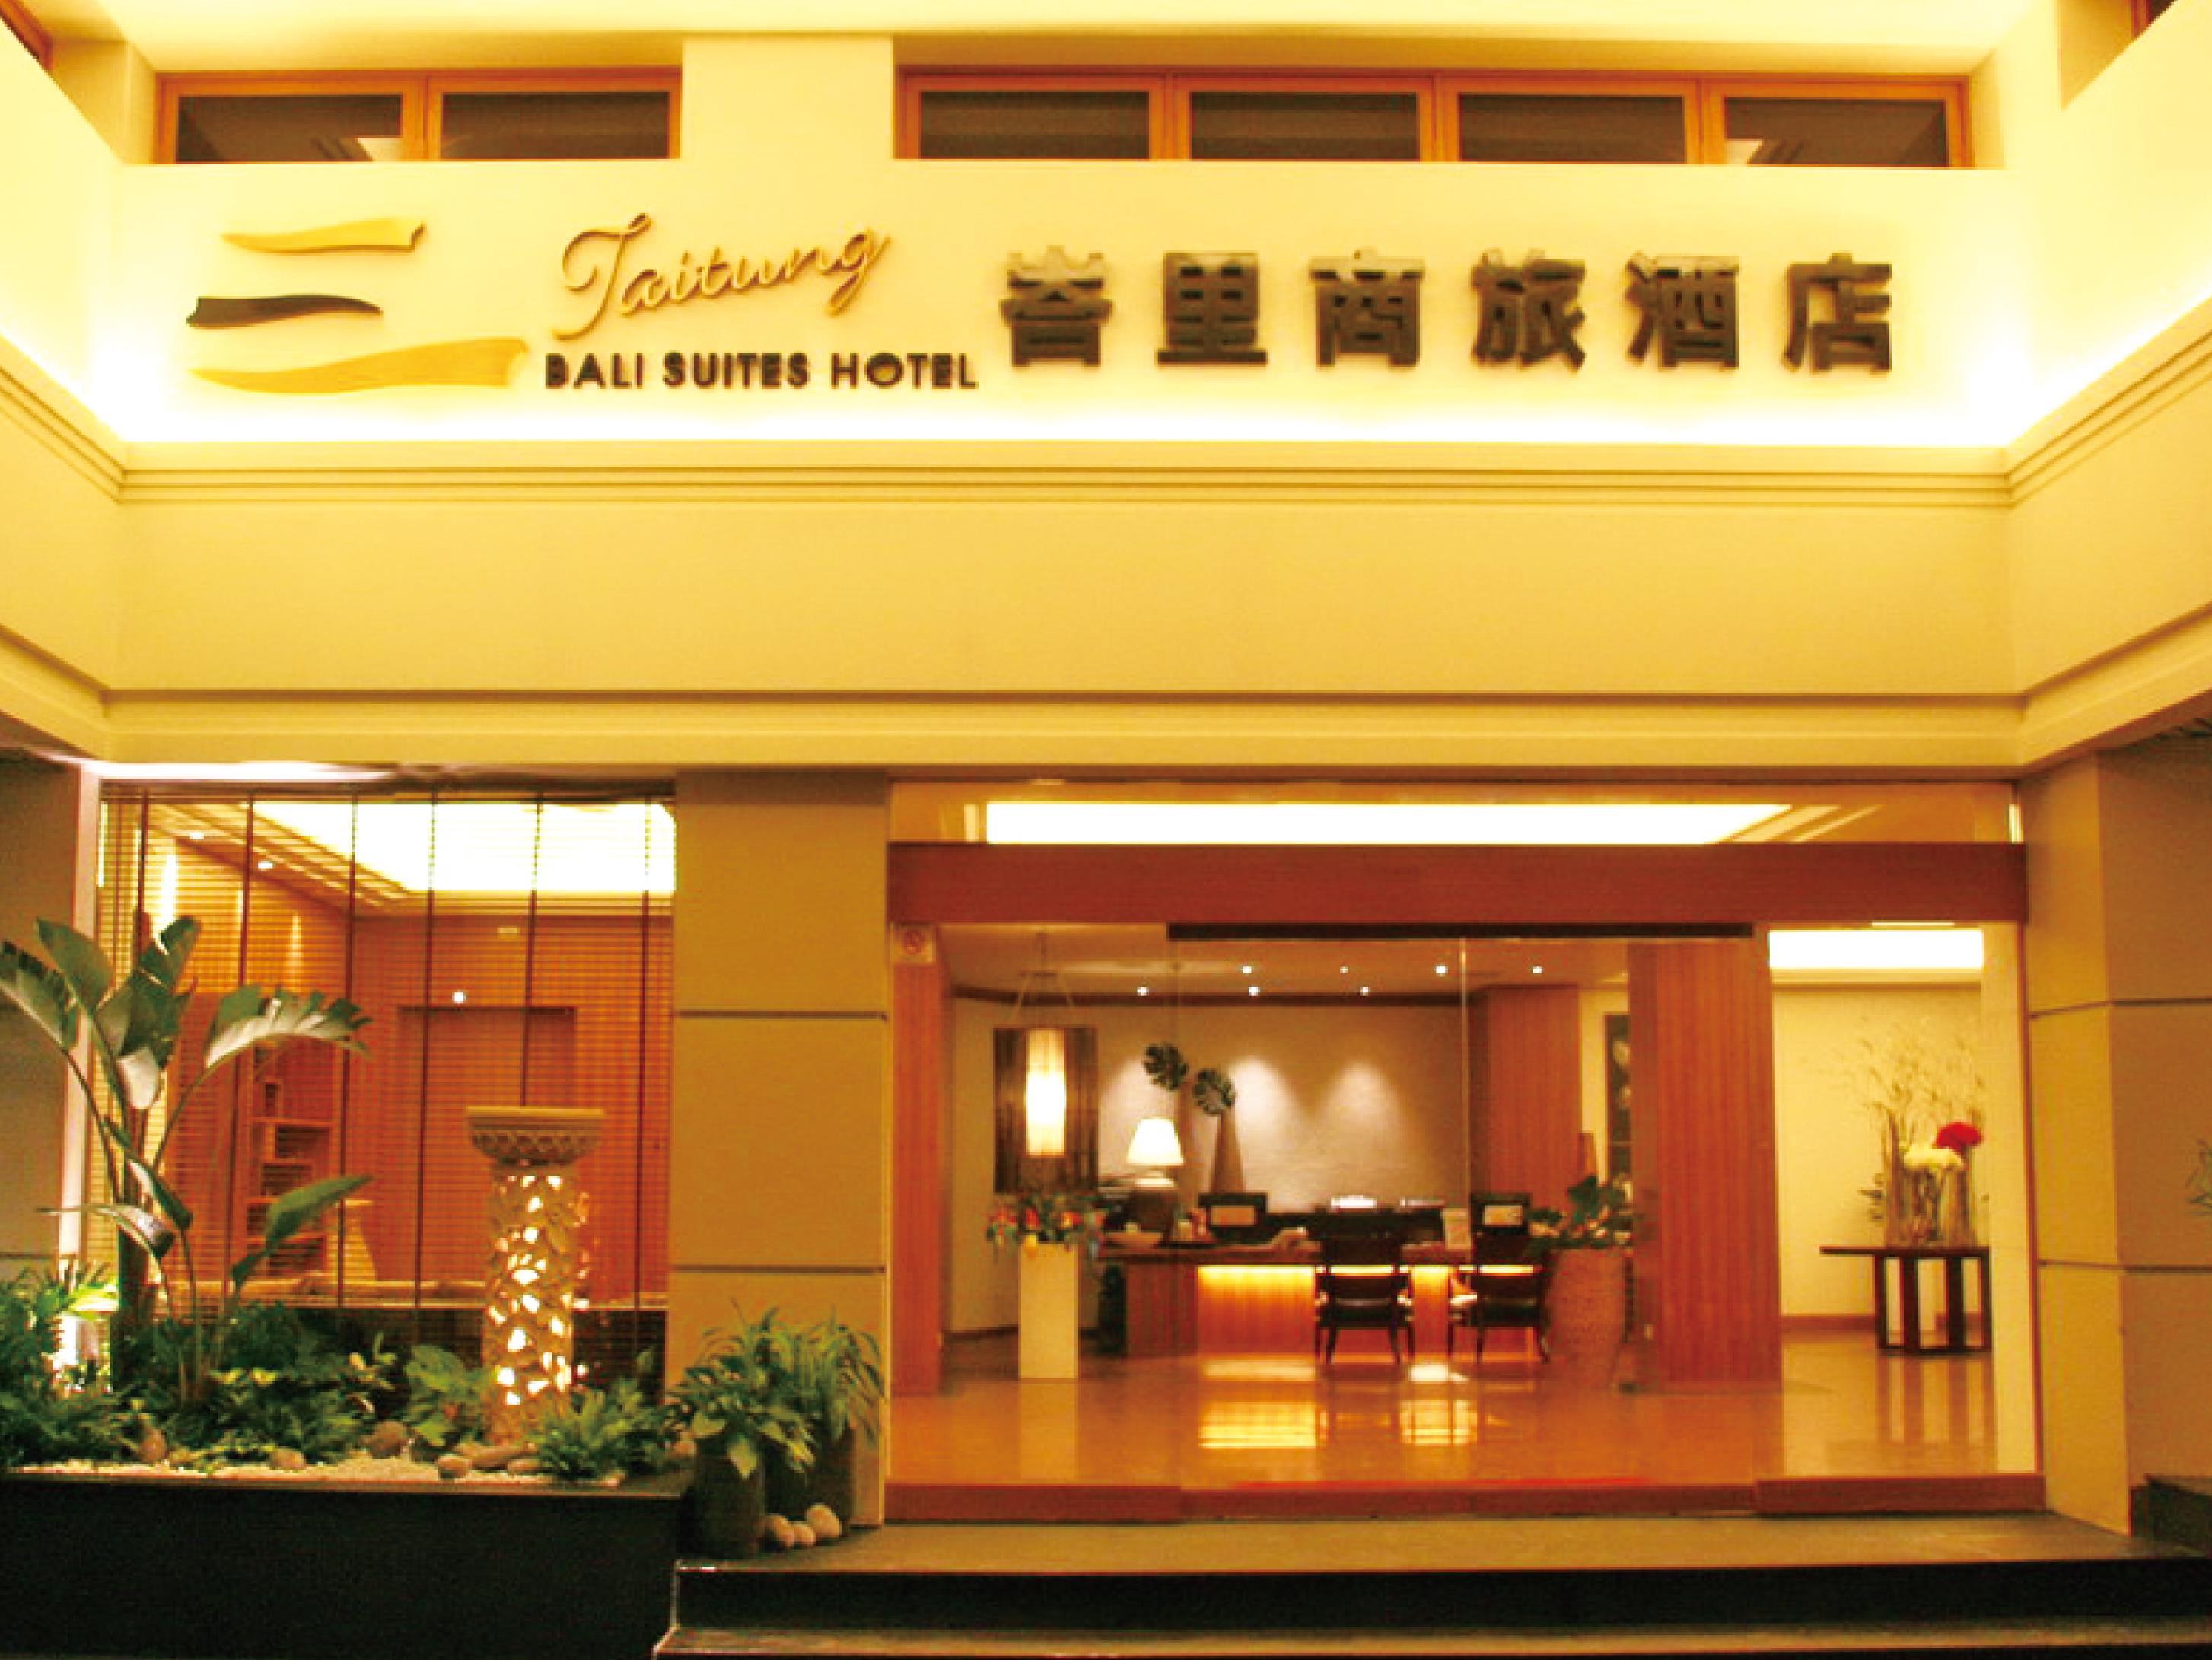 台東峇里商旅(Taitung Bali Suites Hotel)